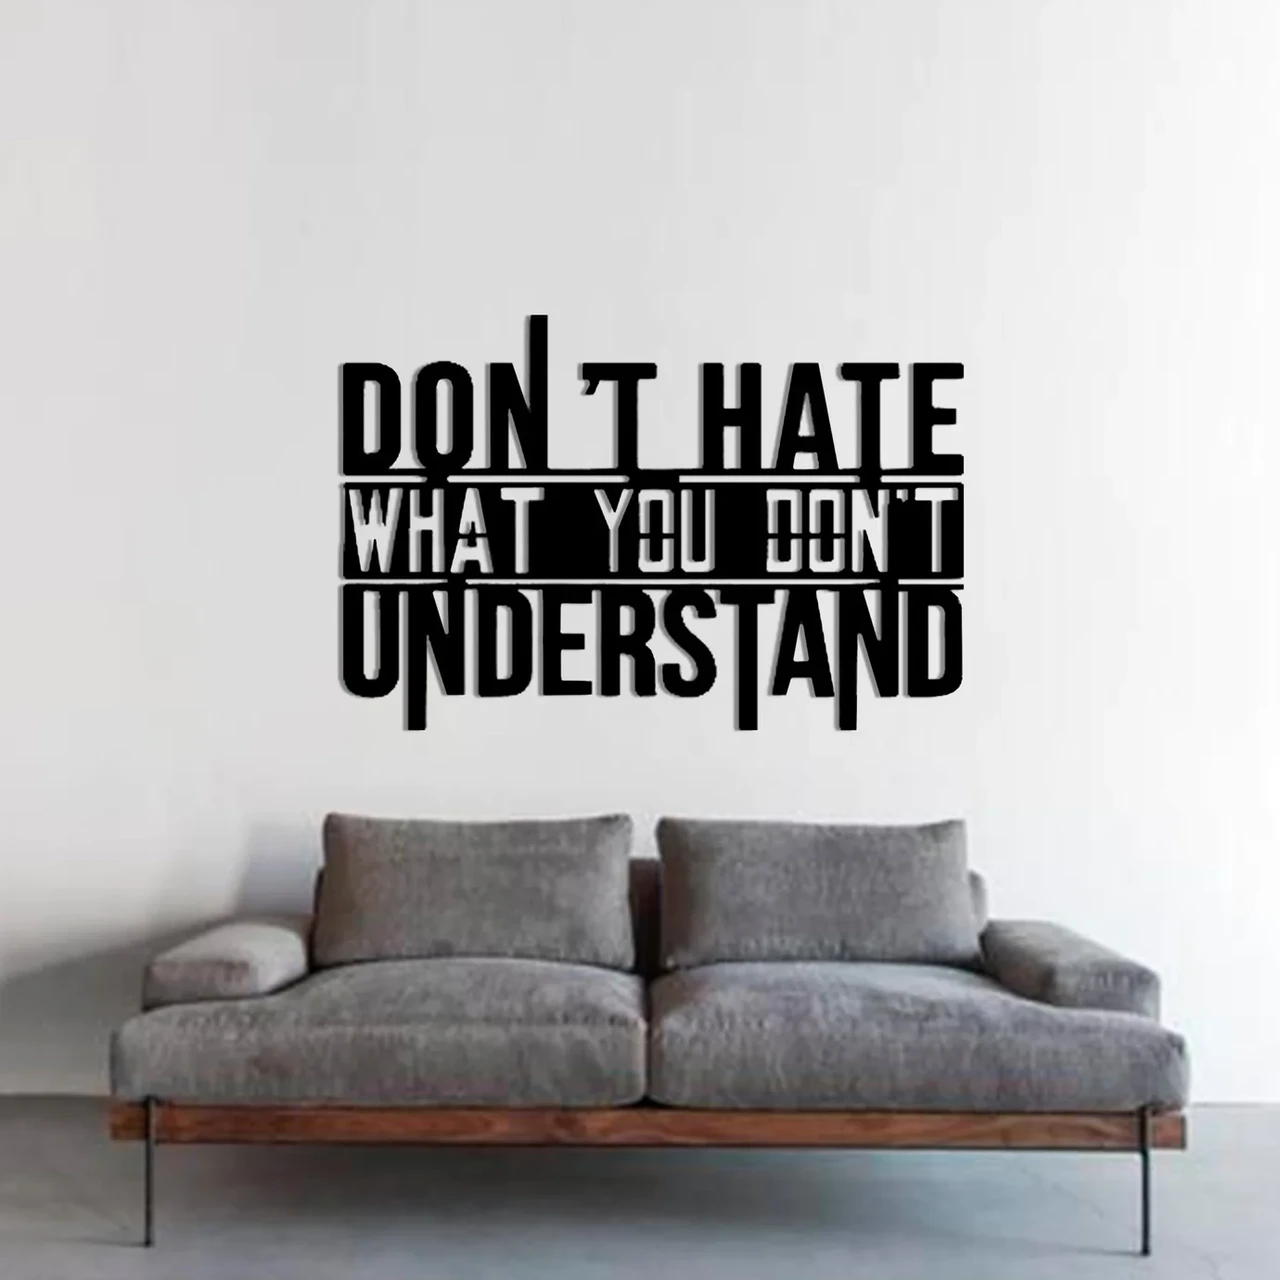 Фігурна картина з дерева, Розмір: 100*66 см Напис: Don't hate what you don't understand